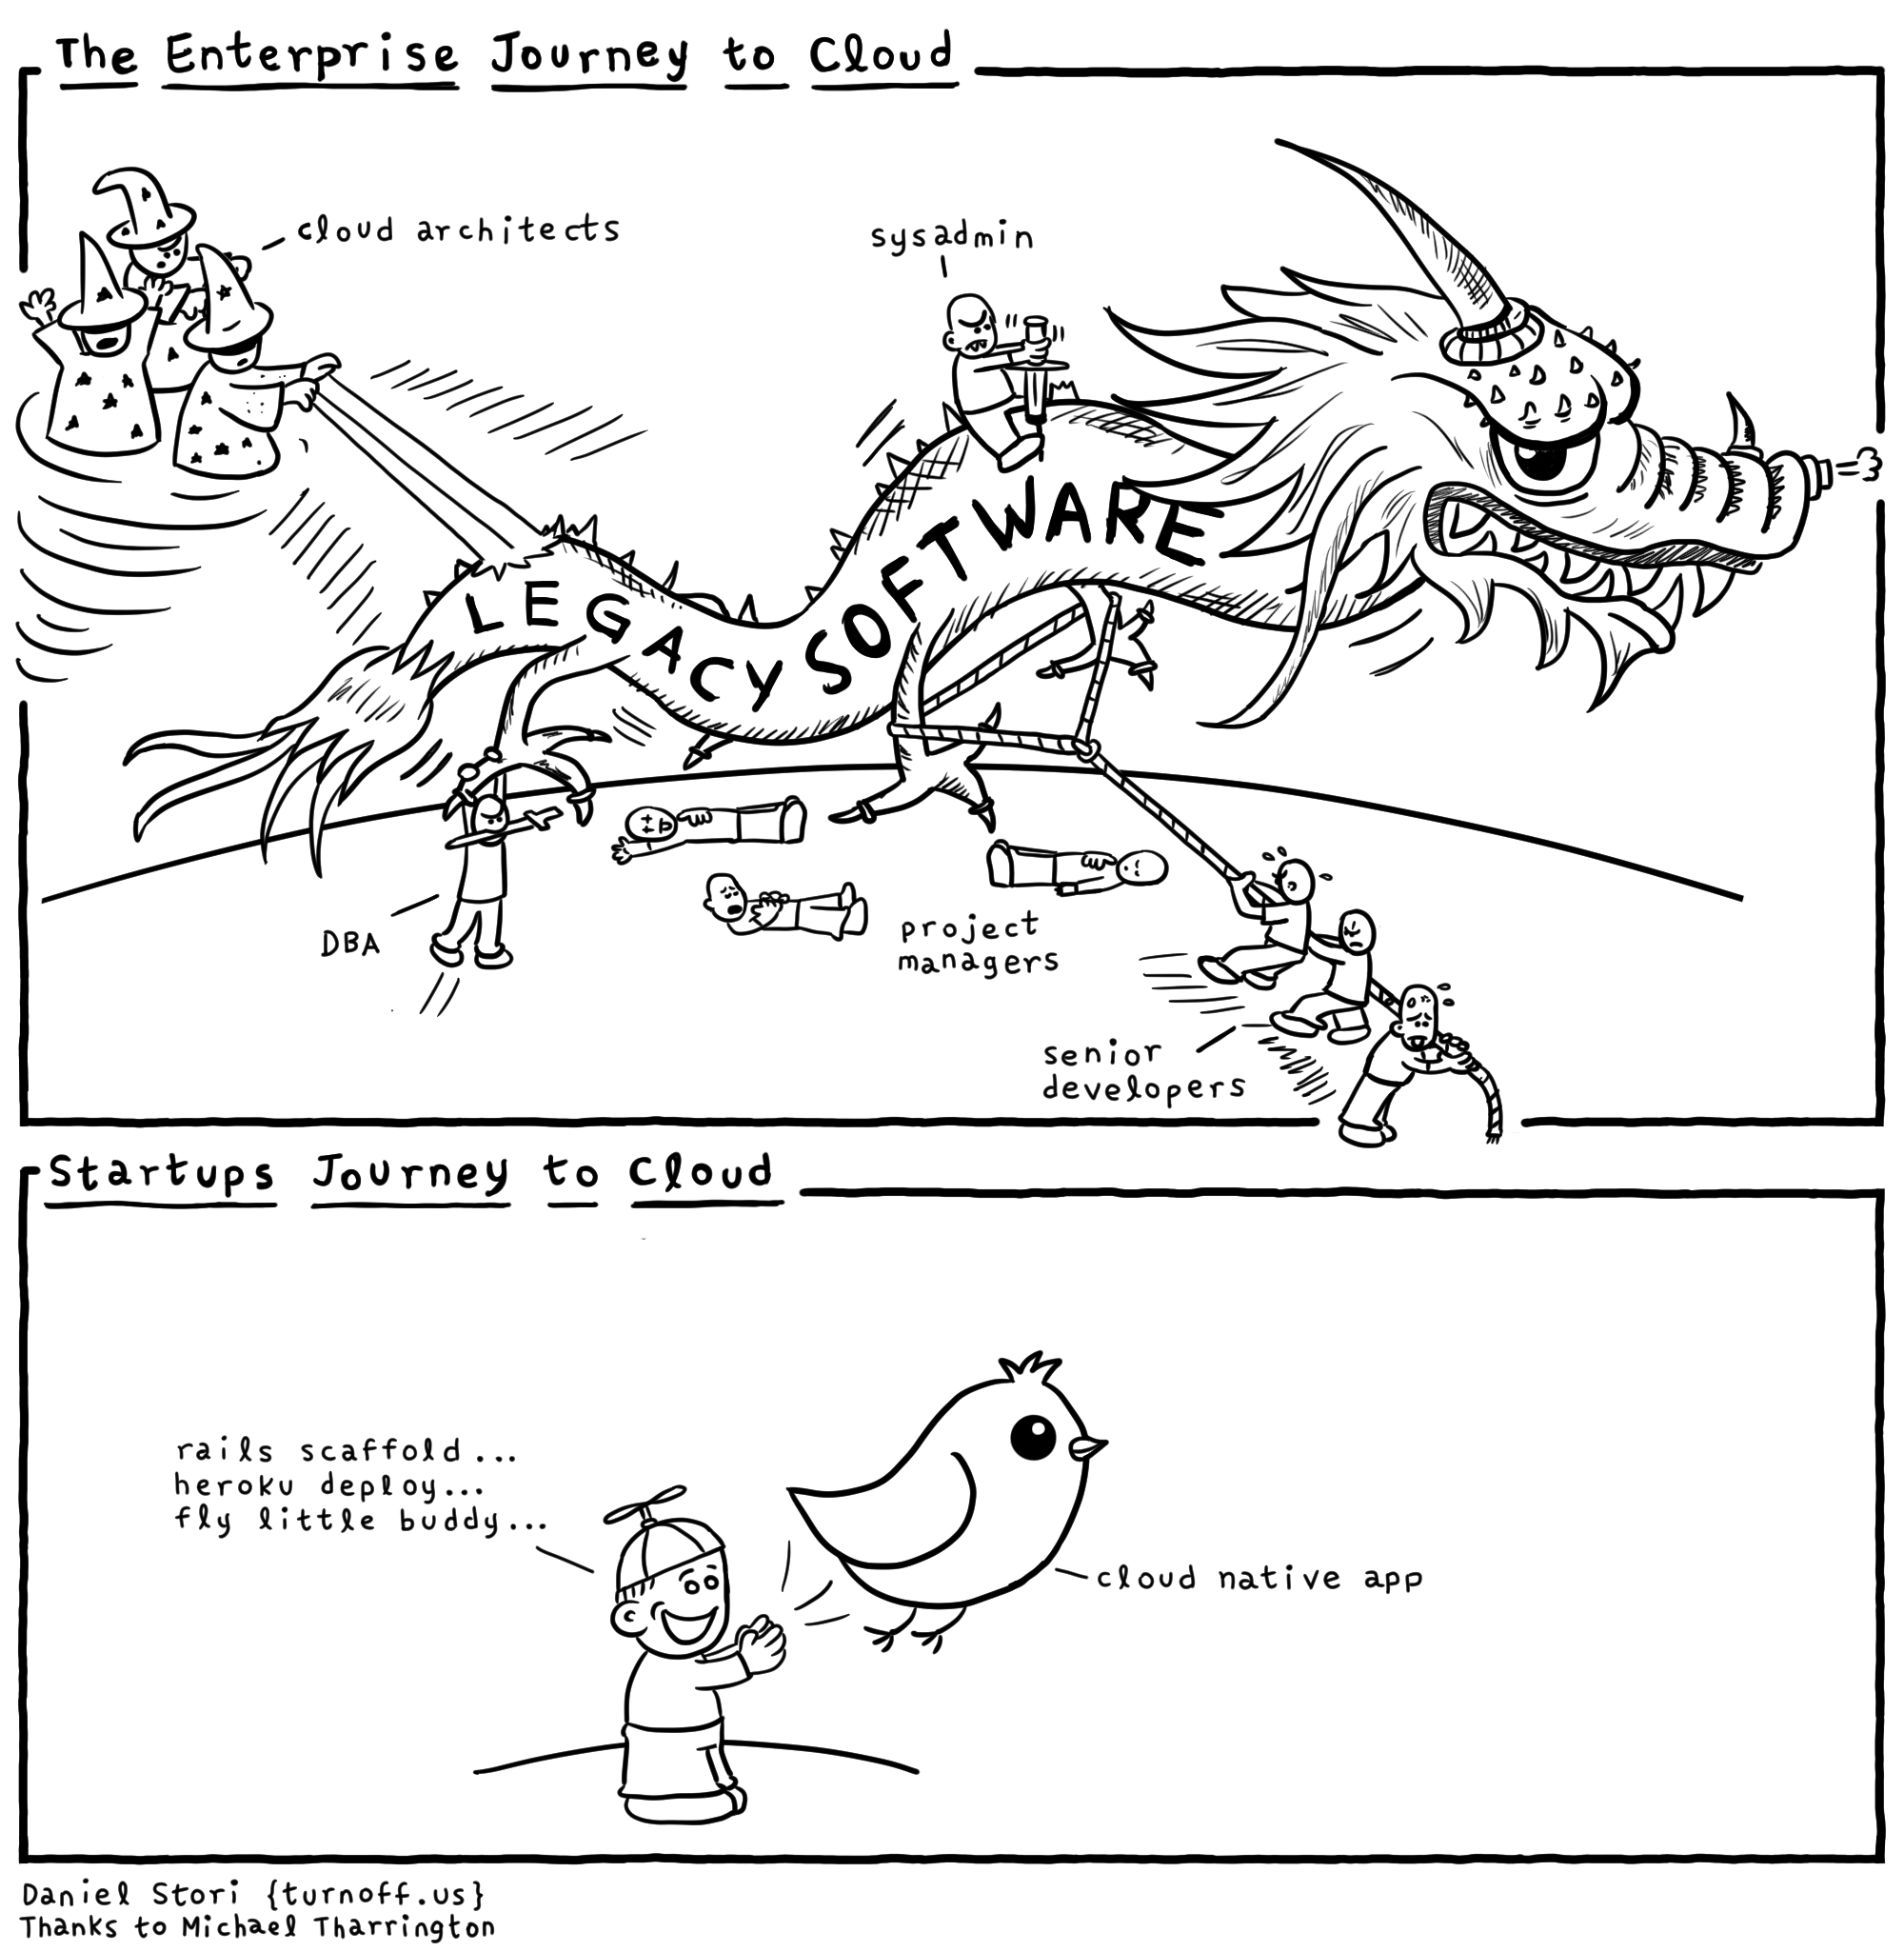 Enterprise vs Startup Journey to Cloud geek comic